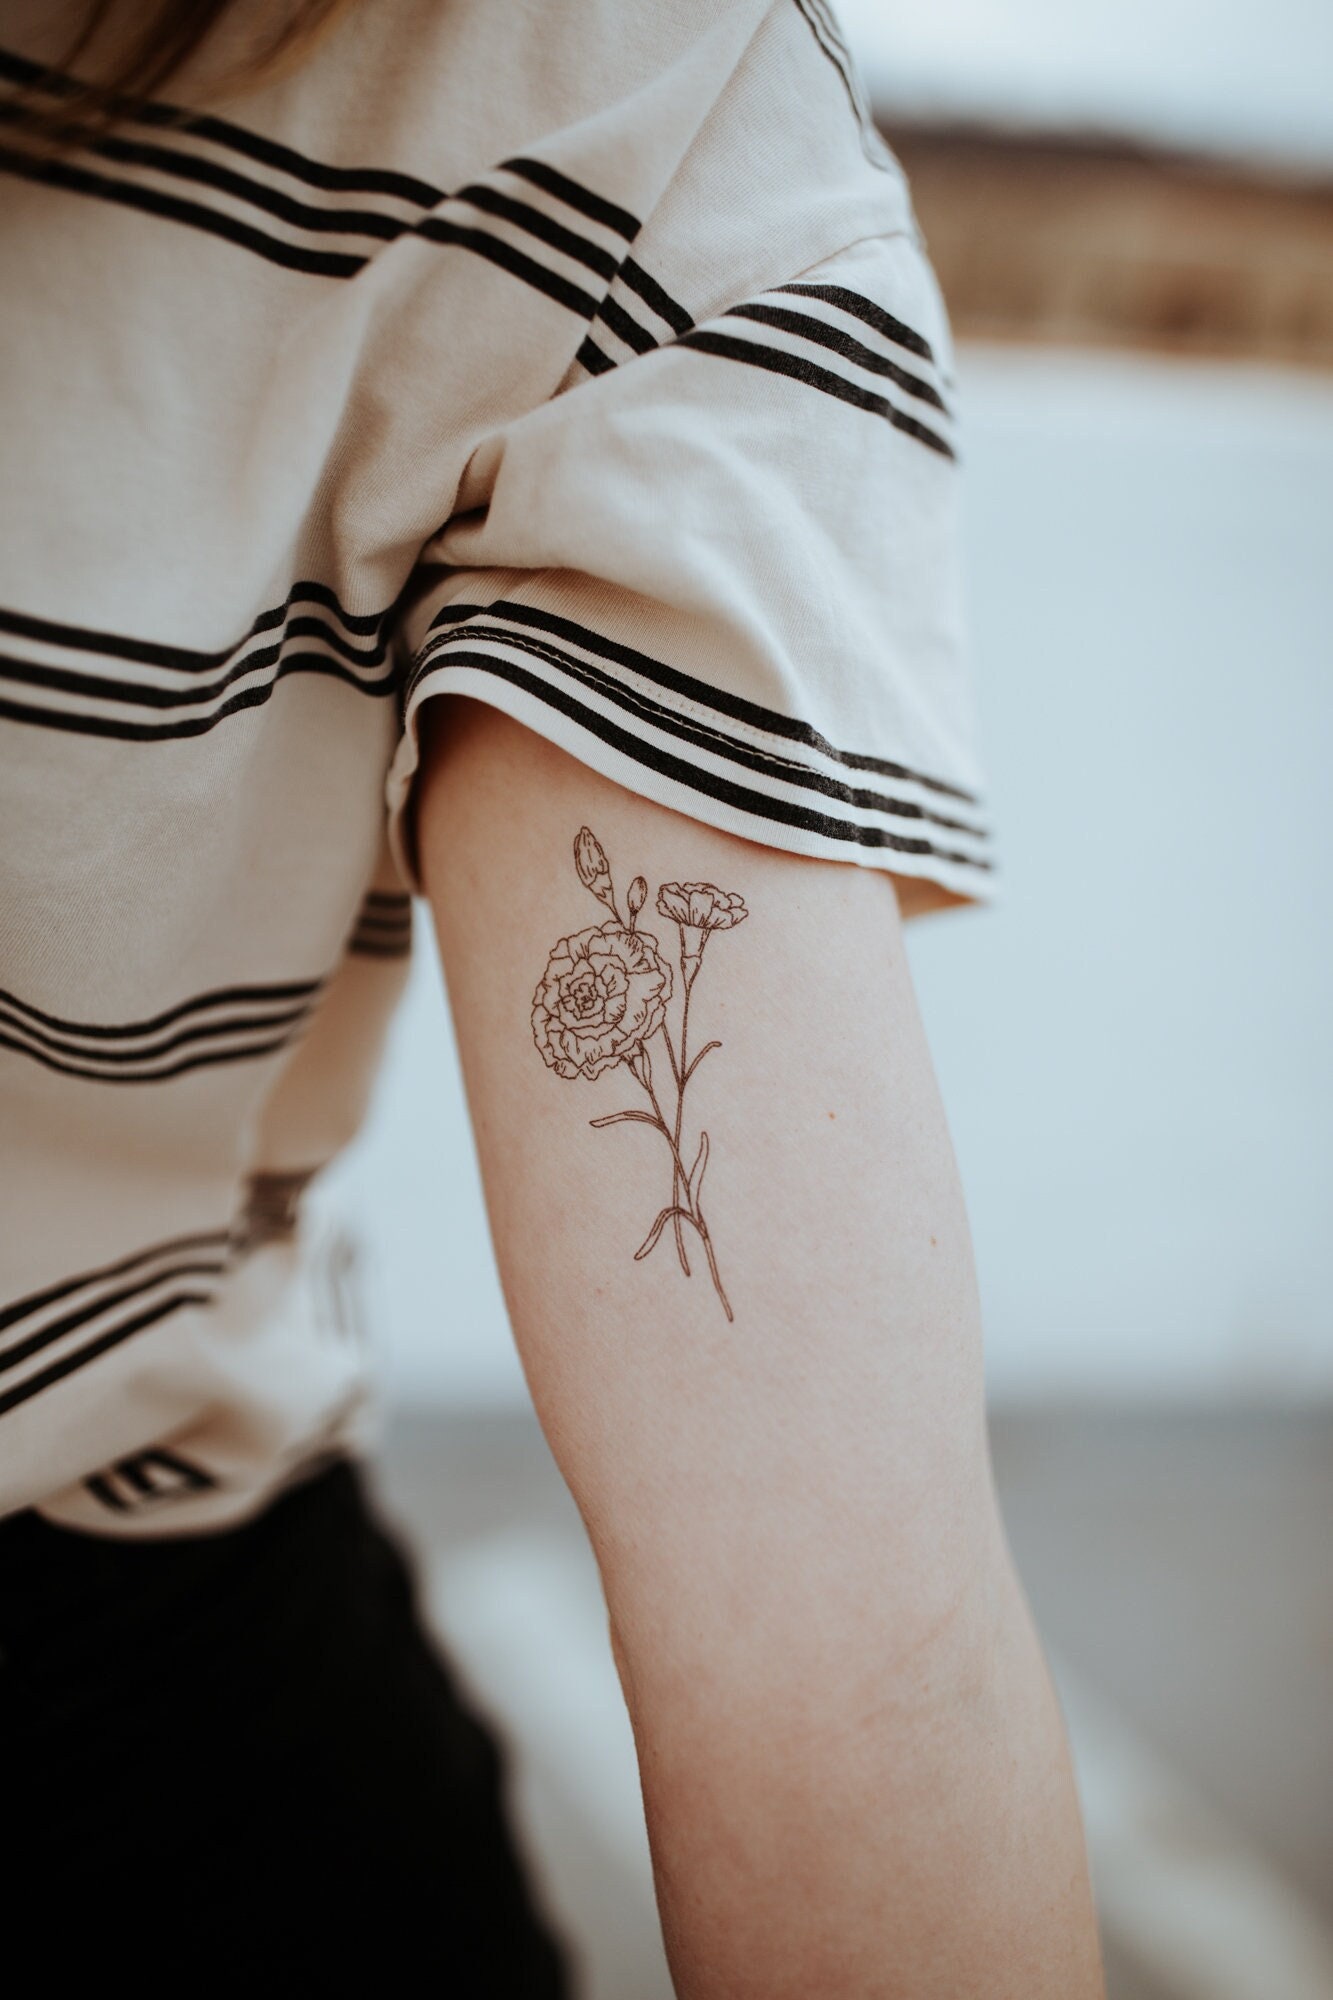 Tattoo uploaded by Cella • Tattoodo